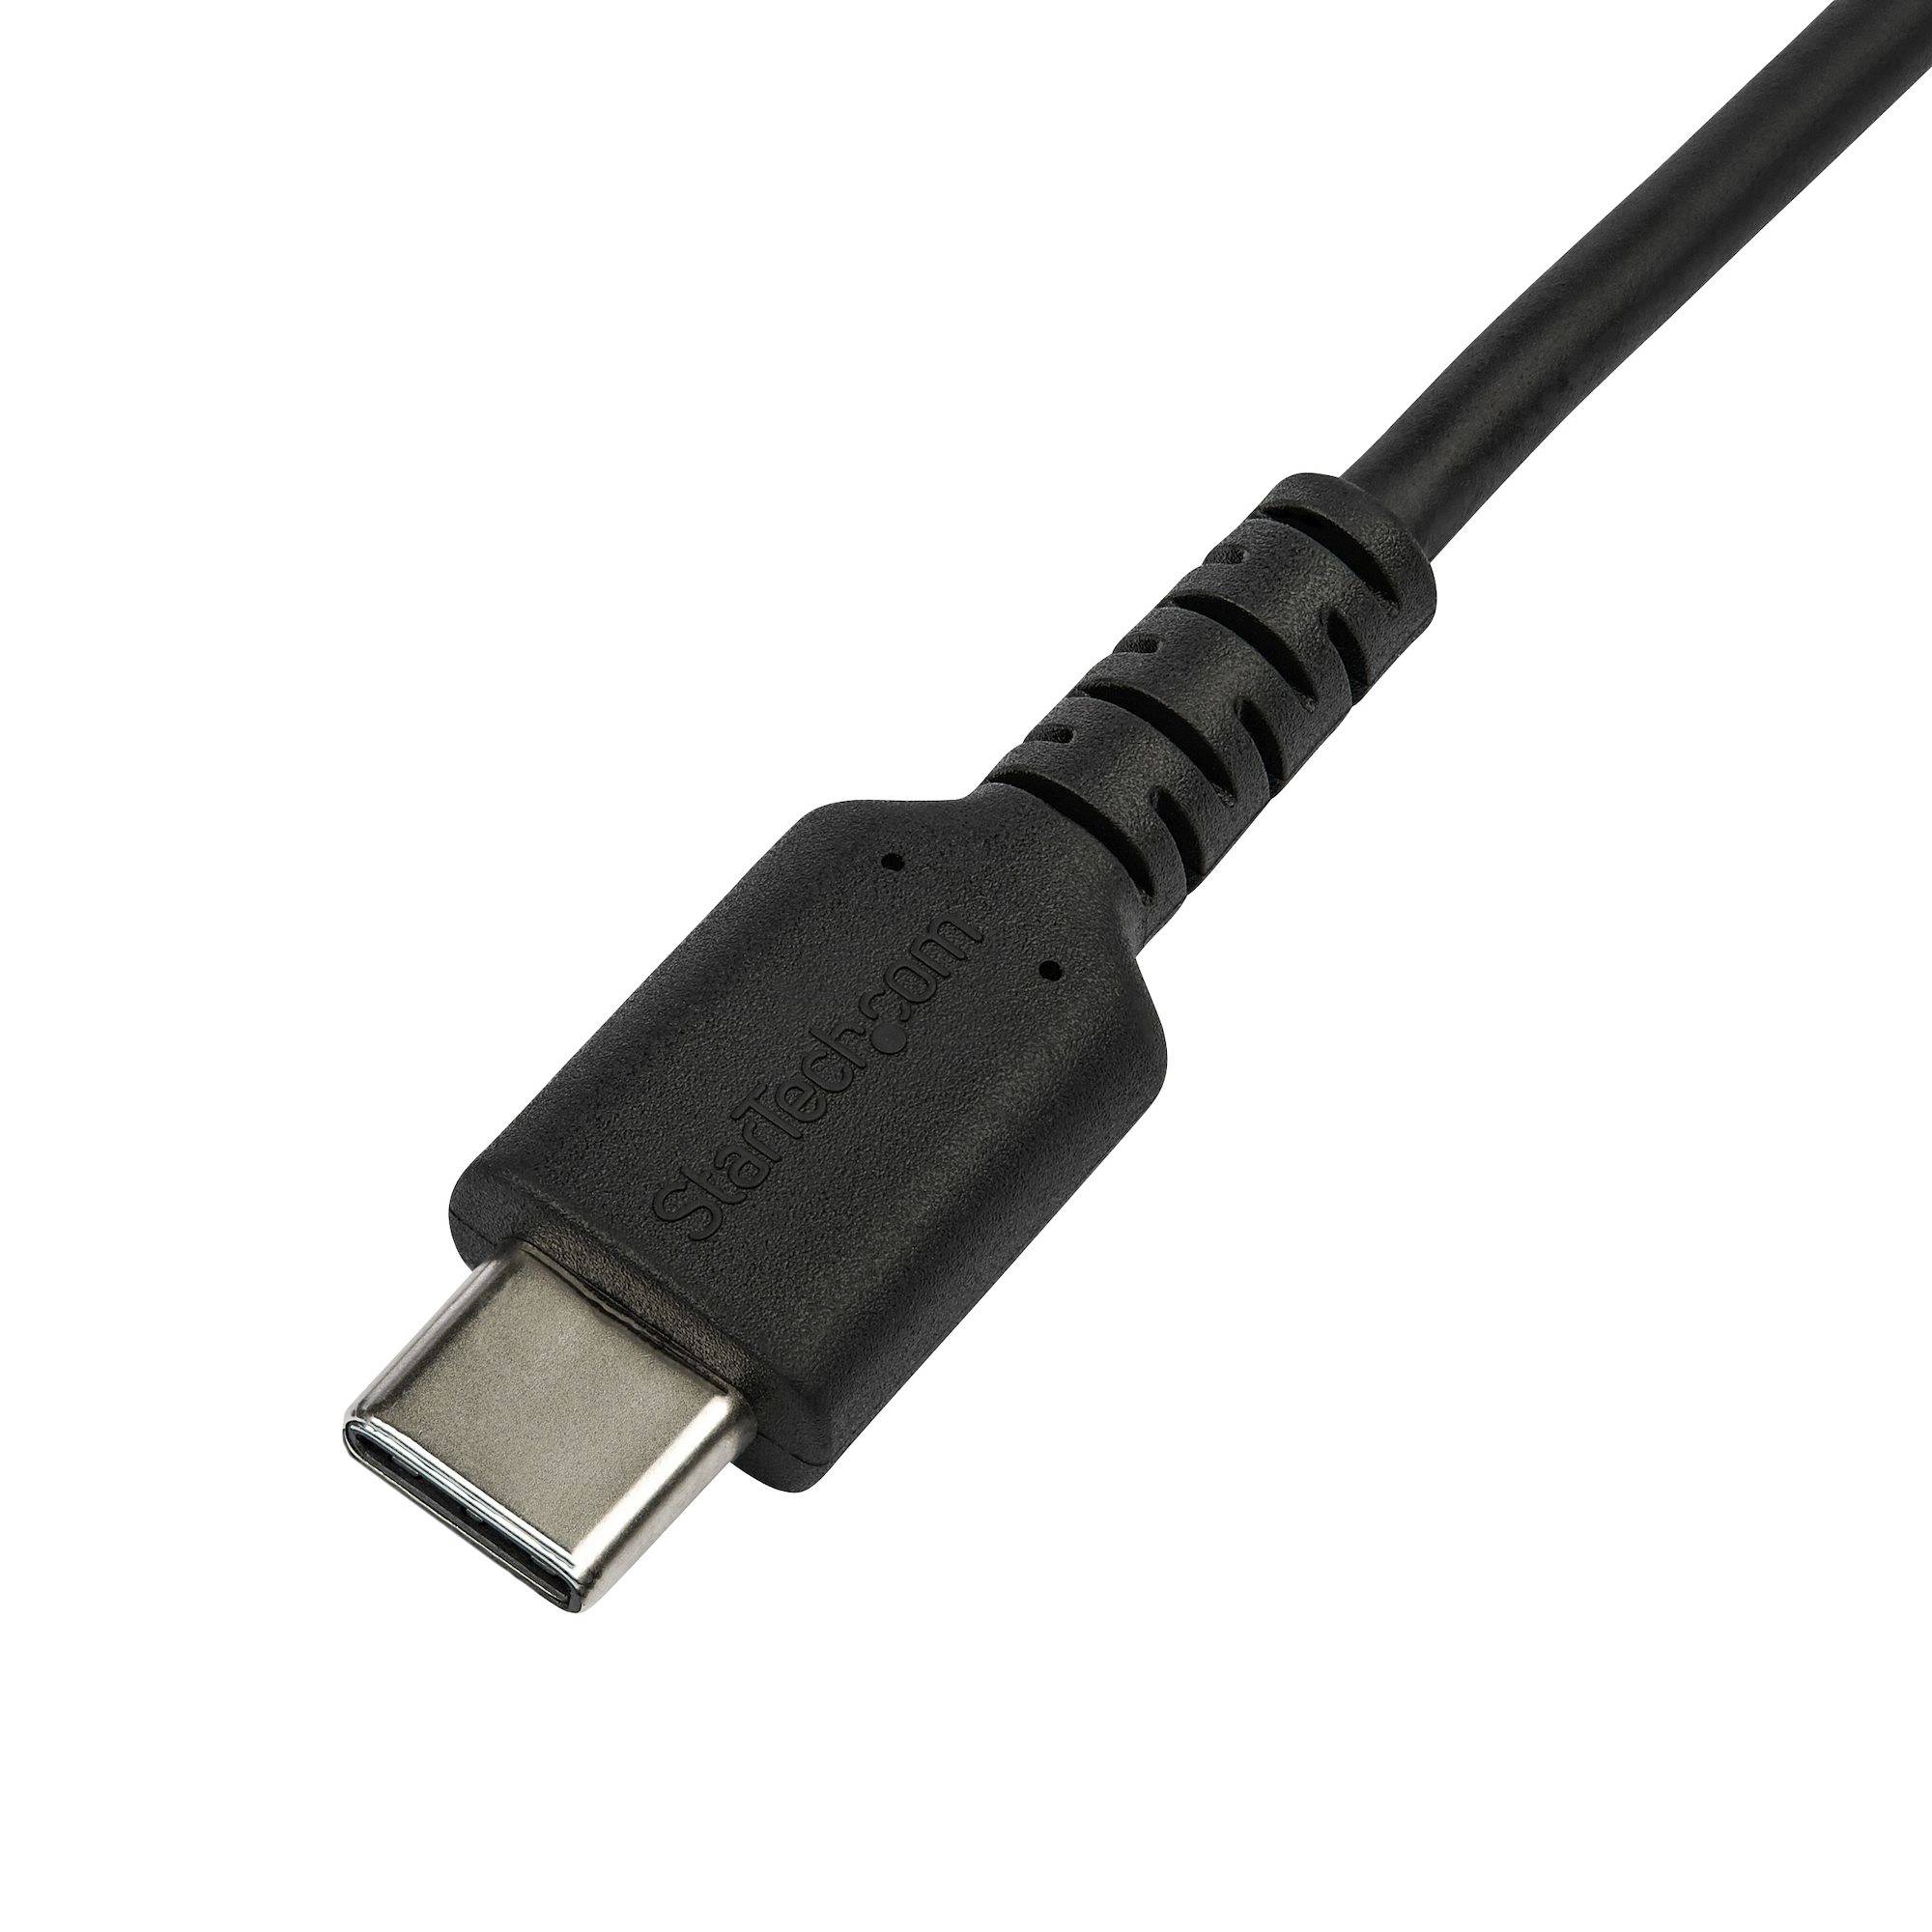 Rca Informatique - image du produit : 2M USB C TO LIGHTNING CABLE BLACK - ARAMID FIBER